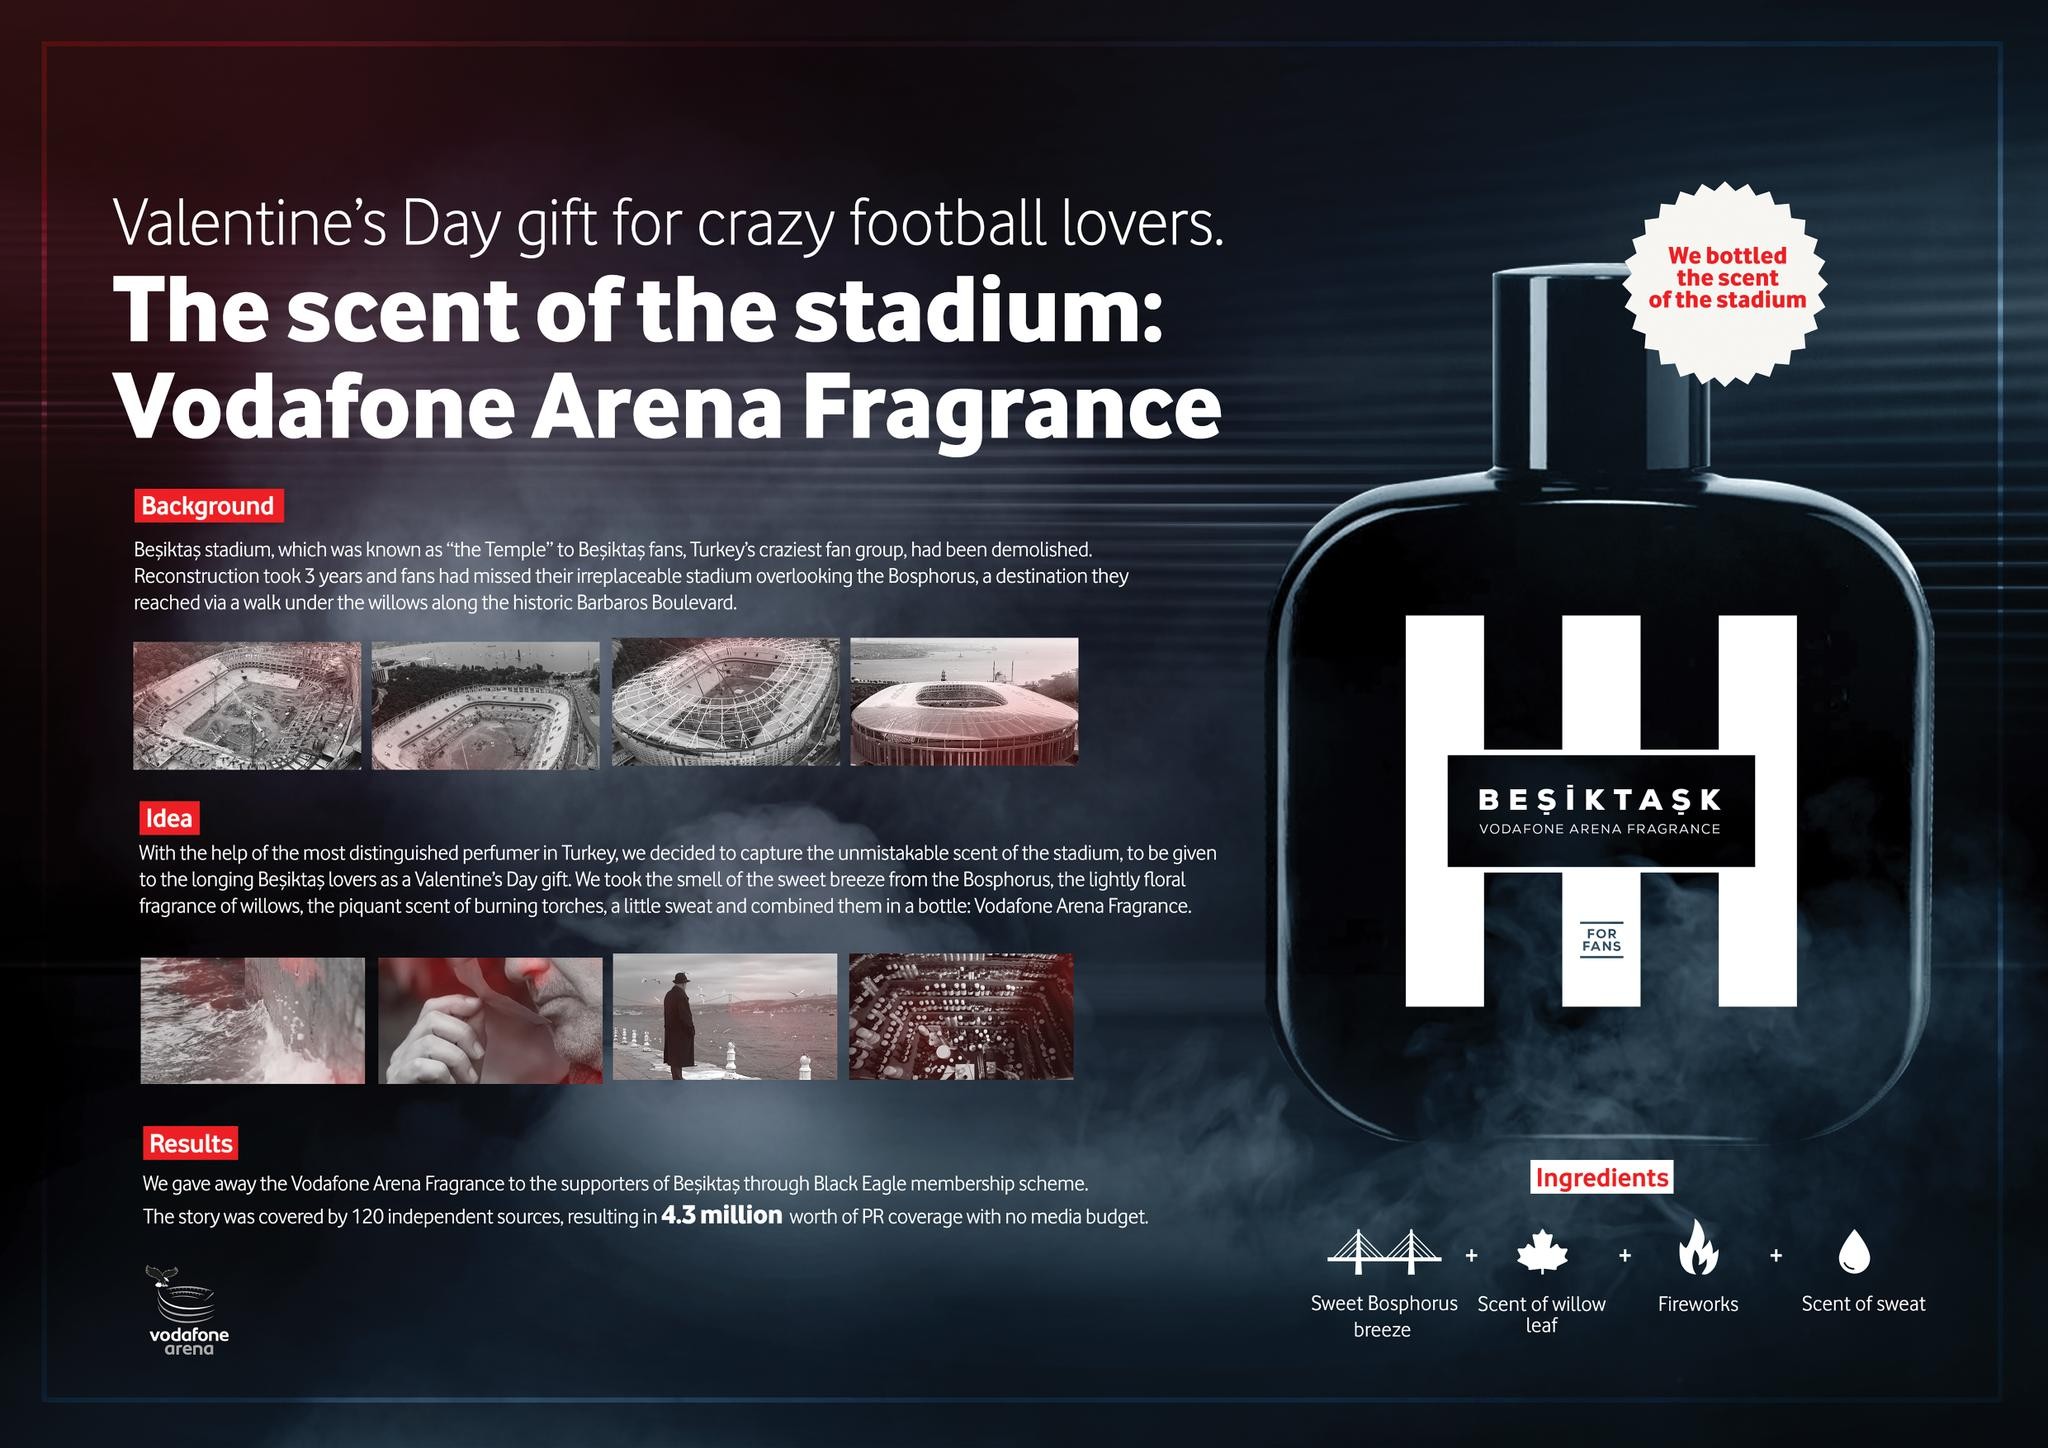 Vodafone Arena Parfume